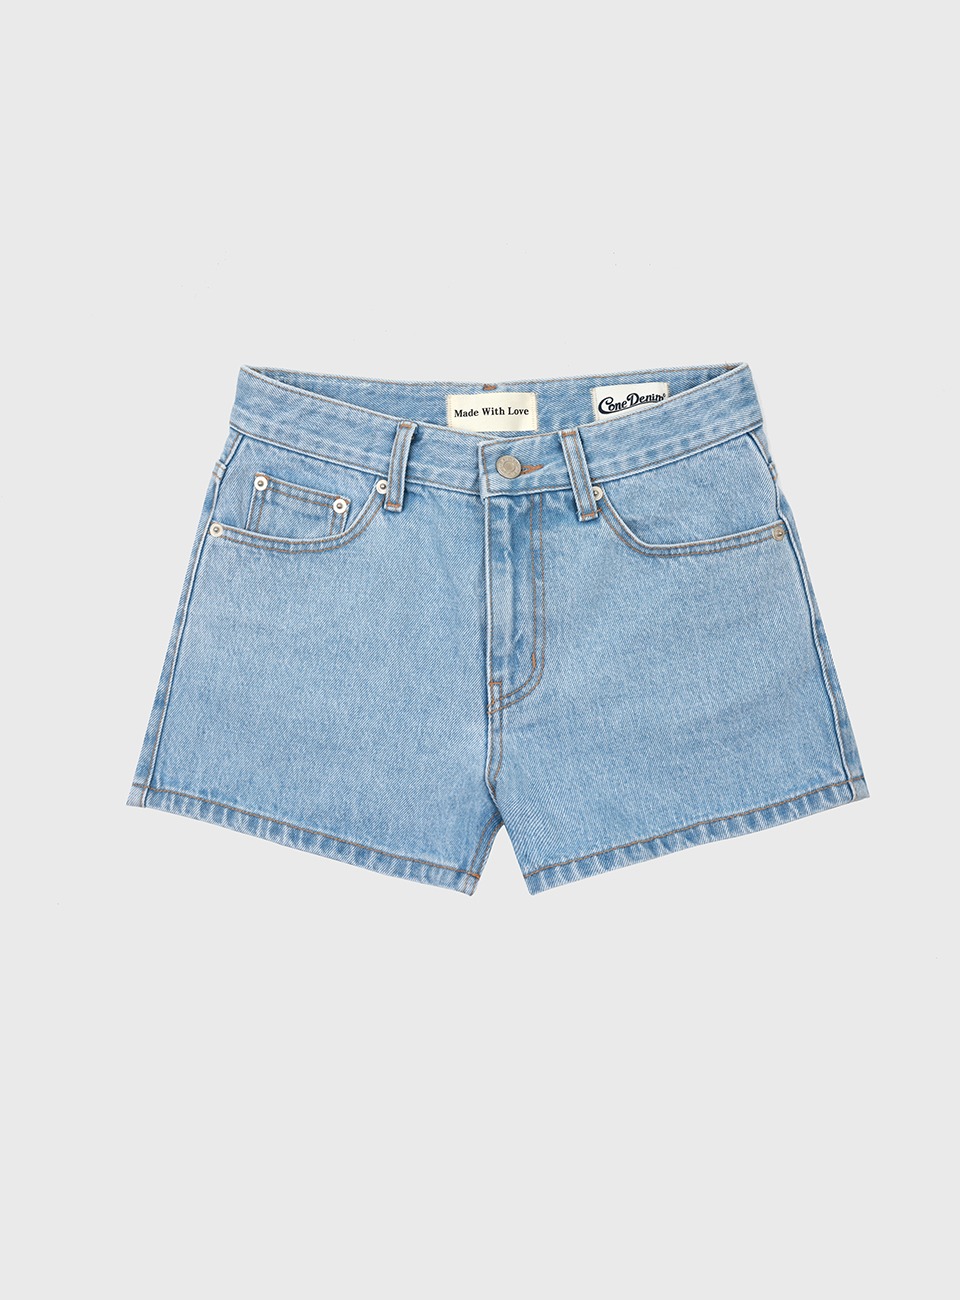 Cone denim shorts(light blue)